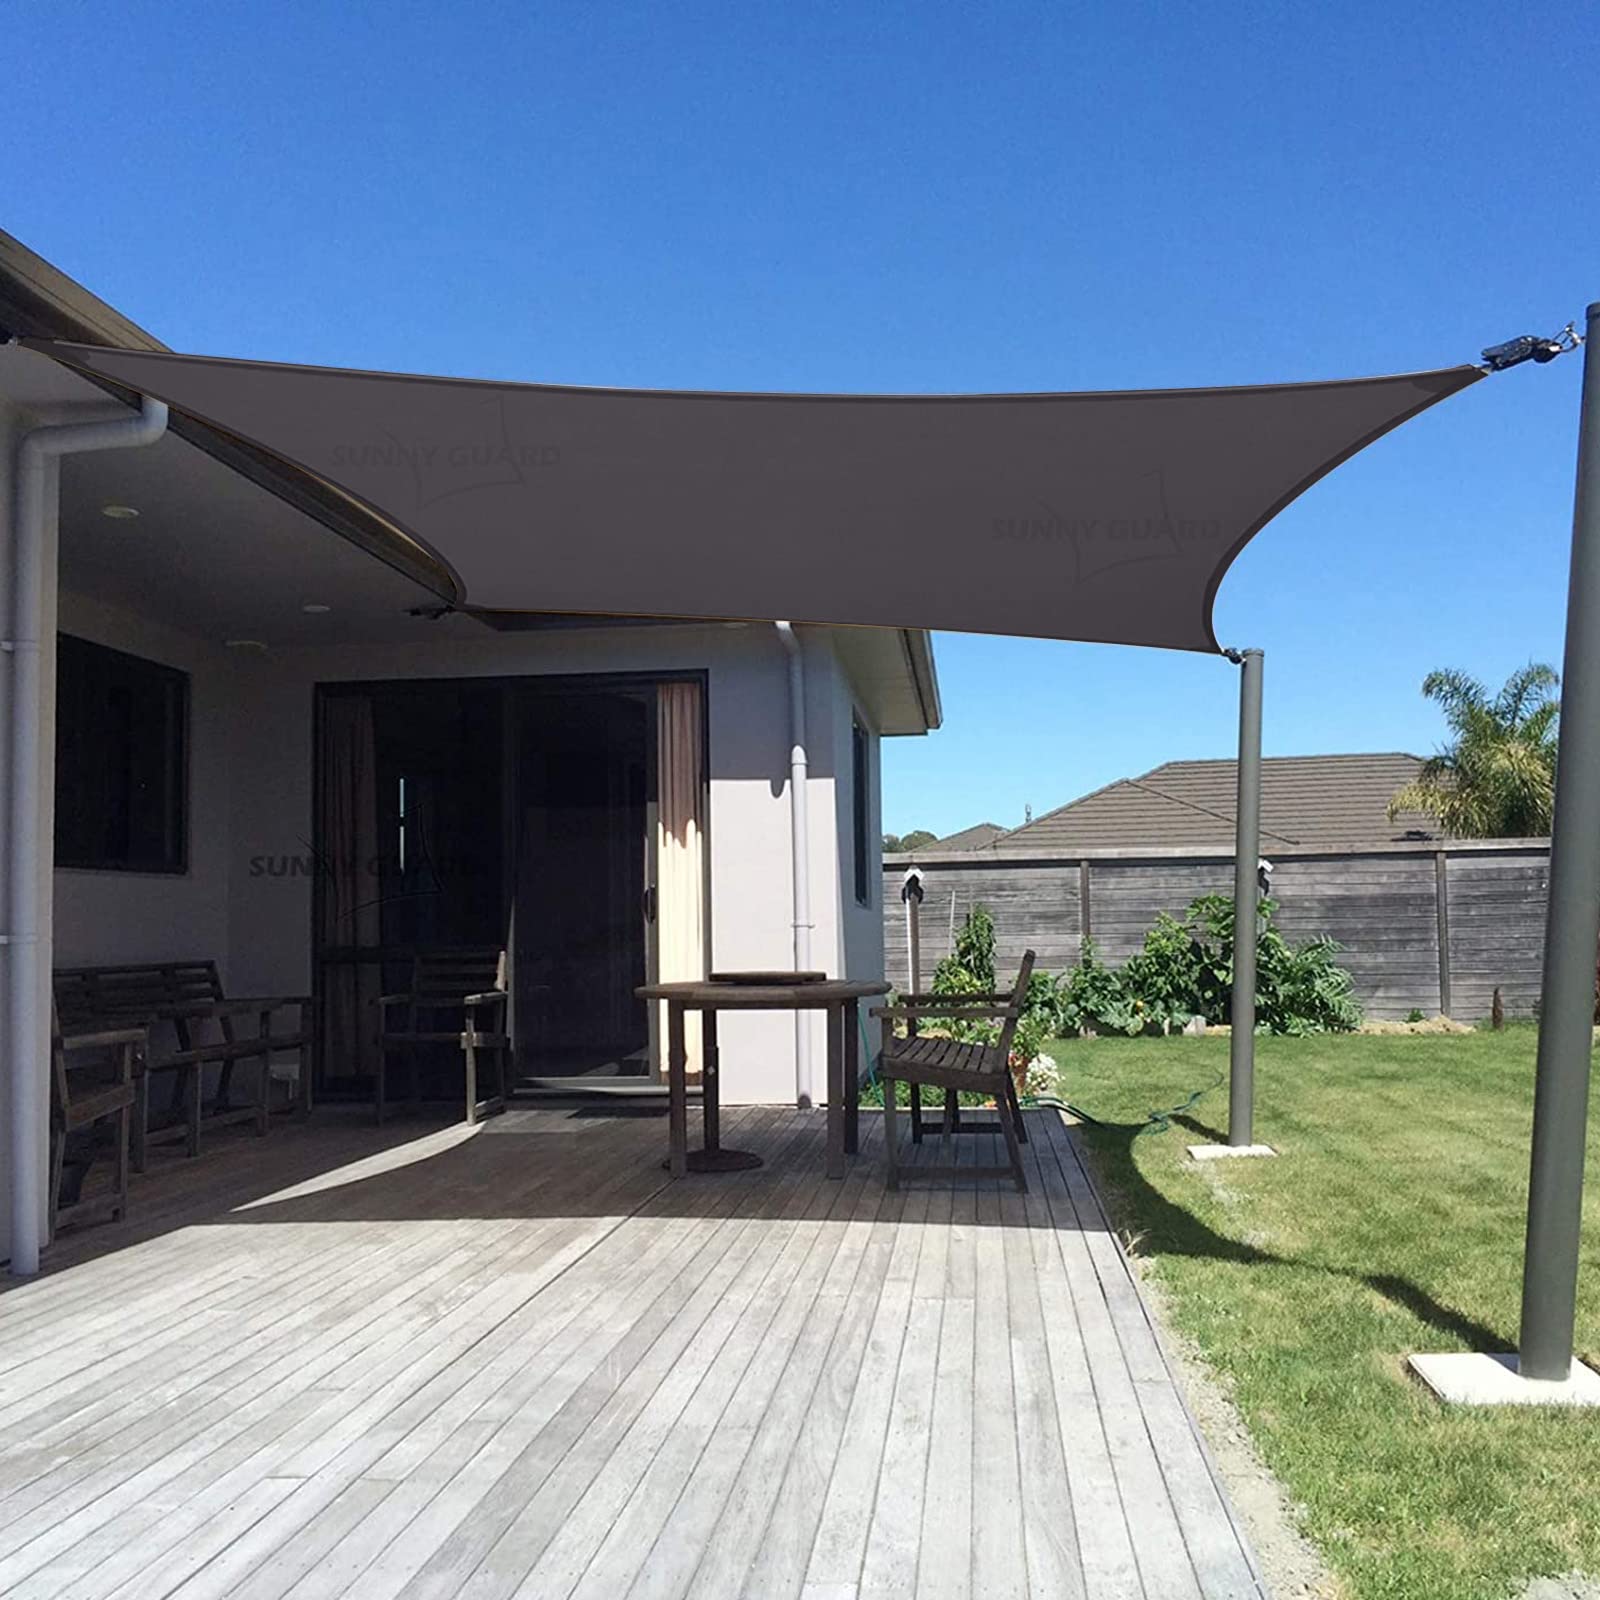 Breathable Square Shade Sail for Backyard Deck Patio Garden